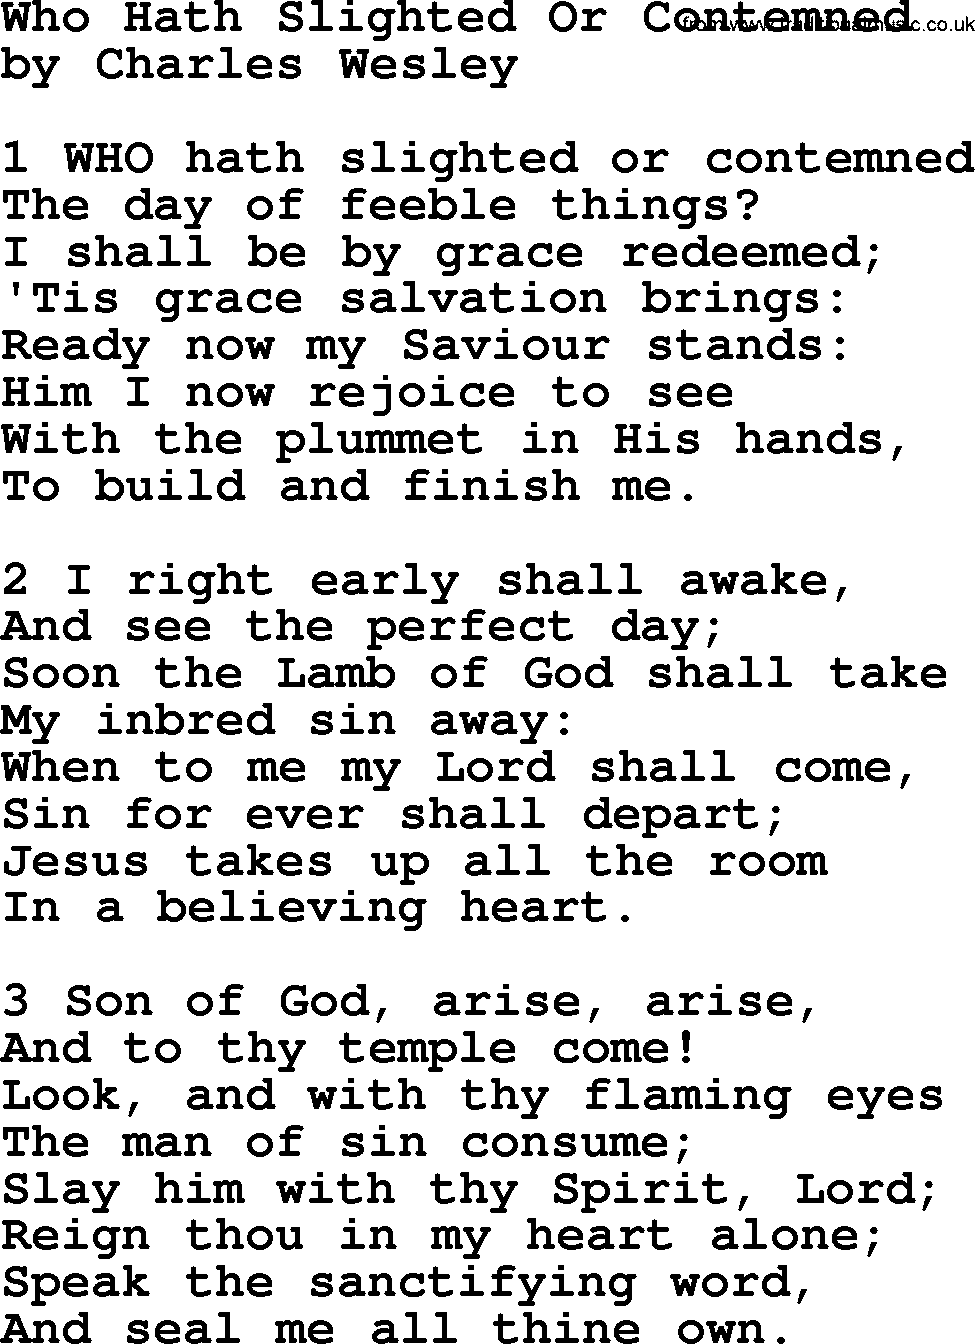 Charles Wesley hymn: Who Hath Slighted Or Contemned, lyrics